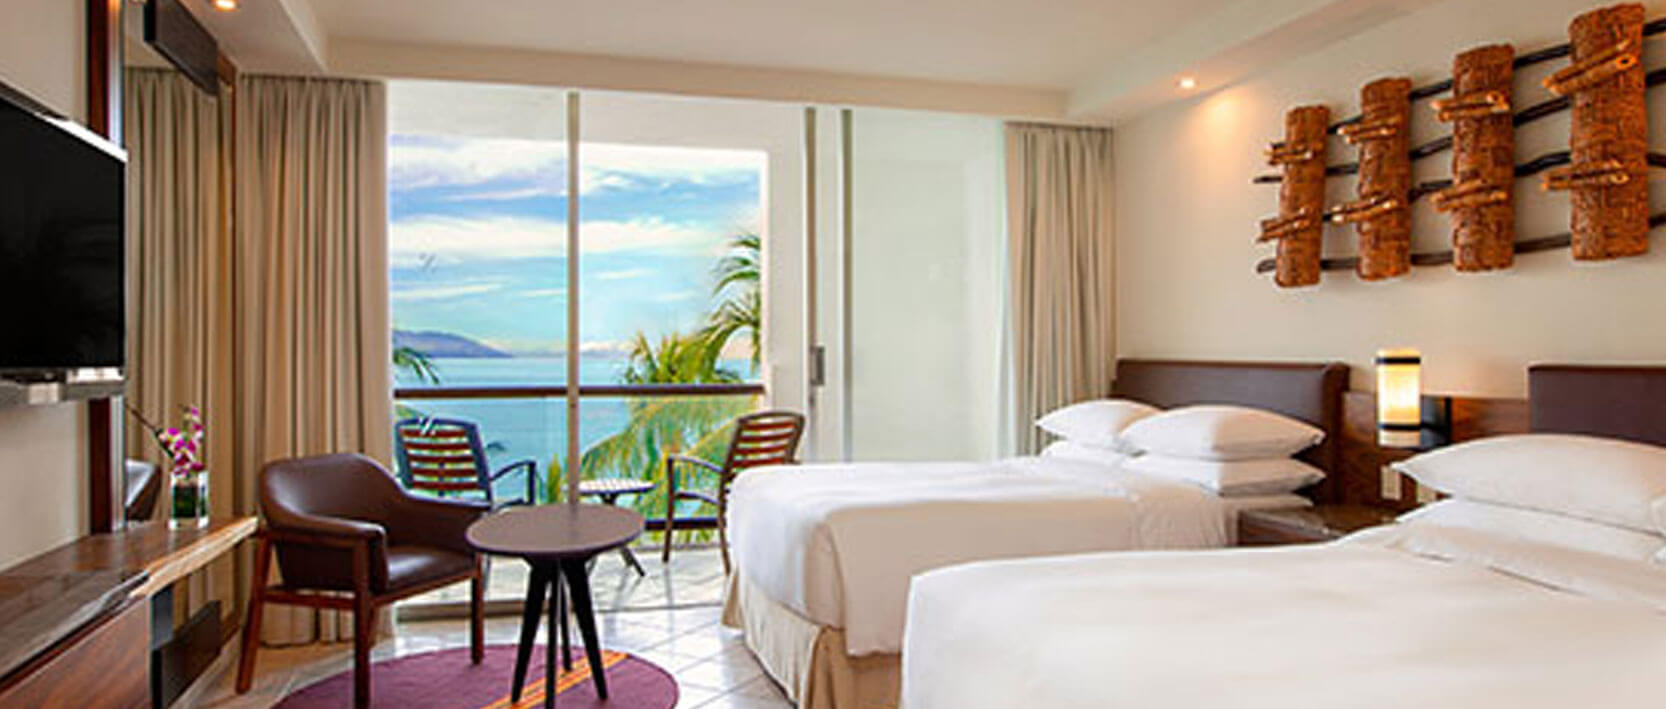 Hyatt Ziva Puerto Vallarta Accommodations - Ocean View Balcony King or Double